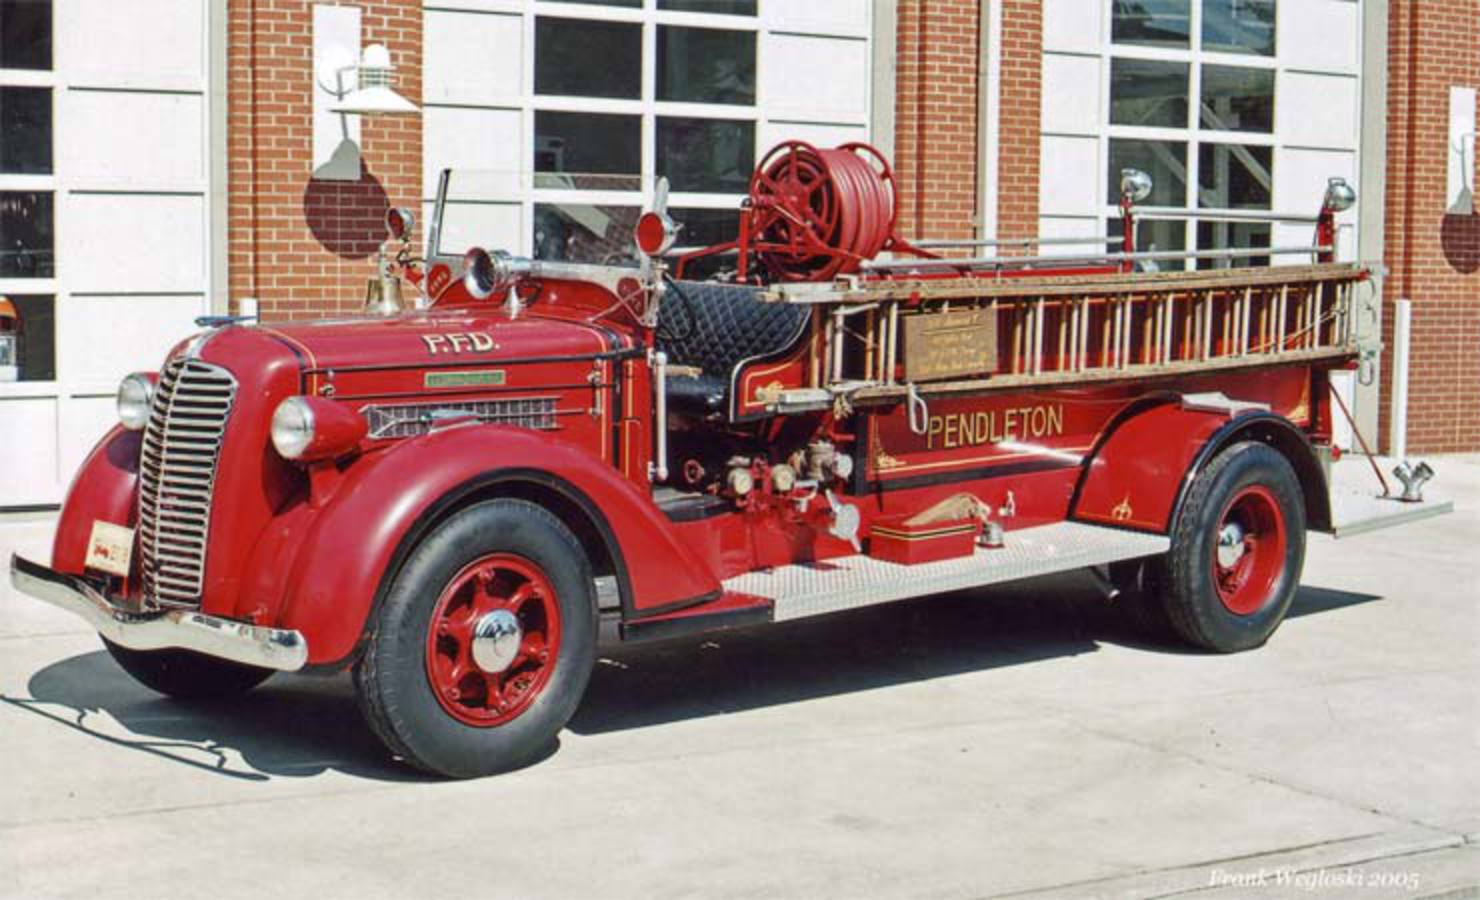 Indiana Fire Trucks: Pendleton Volunteer Fire Department